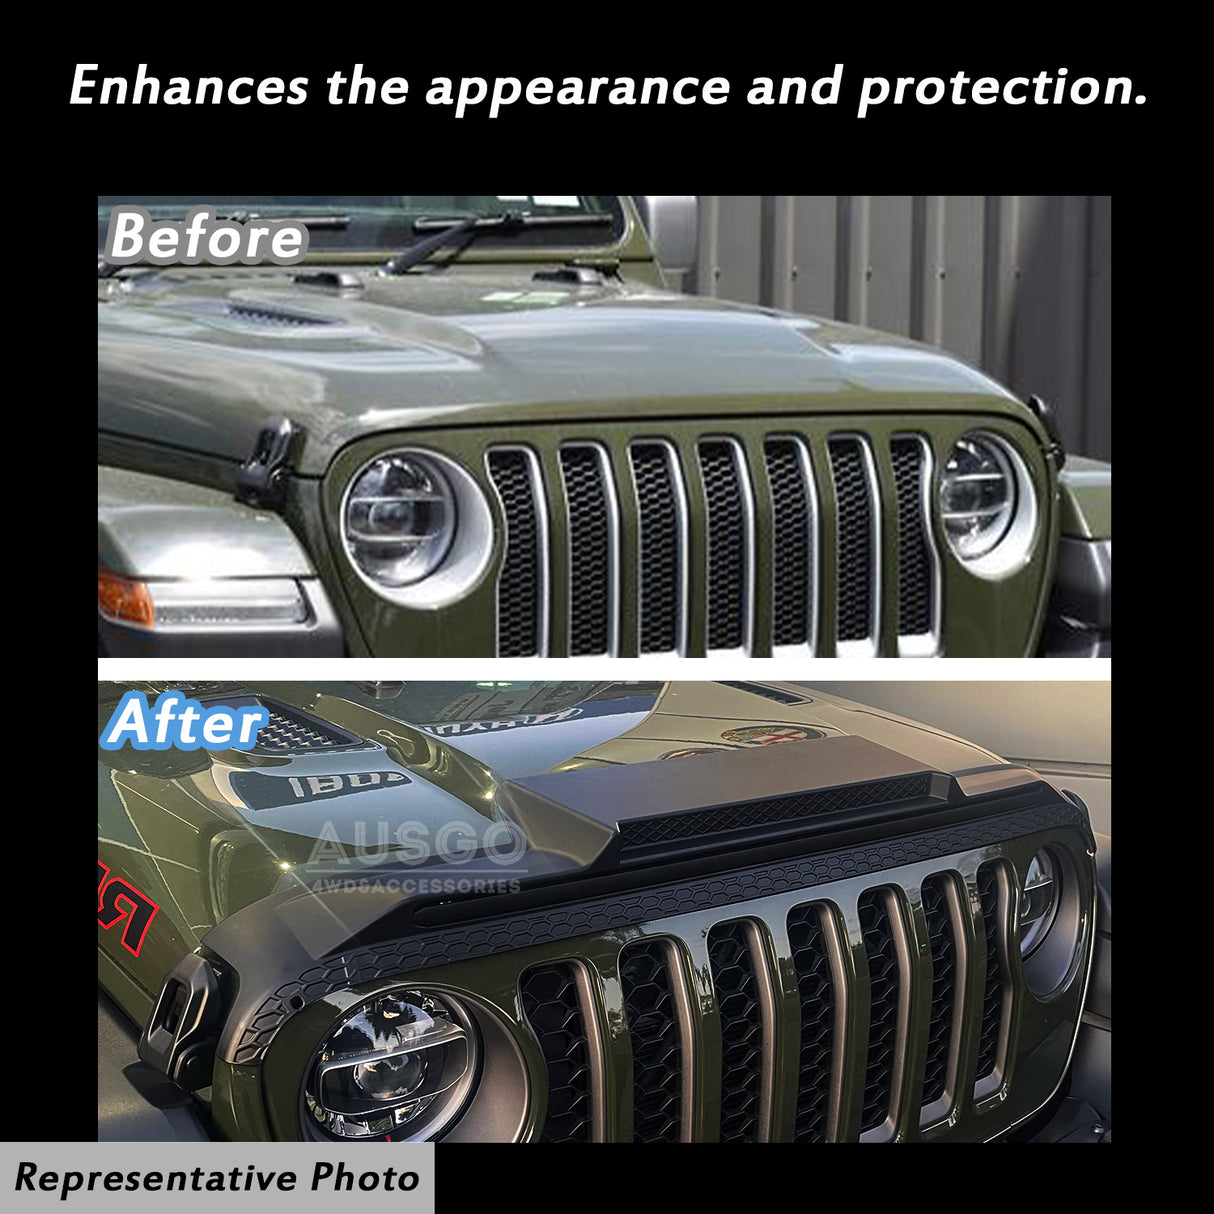 4PCS Wide Type Luxury Weather Shields + Bonnet Protector for Jeep Wrangler JL Series 2018-Onwards Weathershields Window Visors